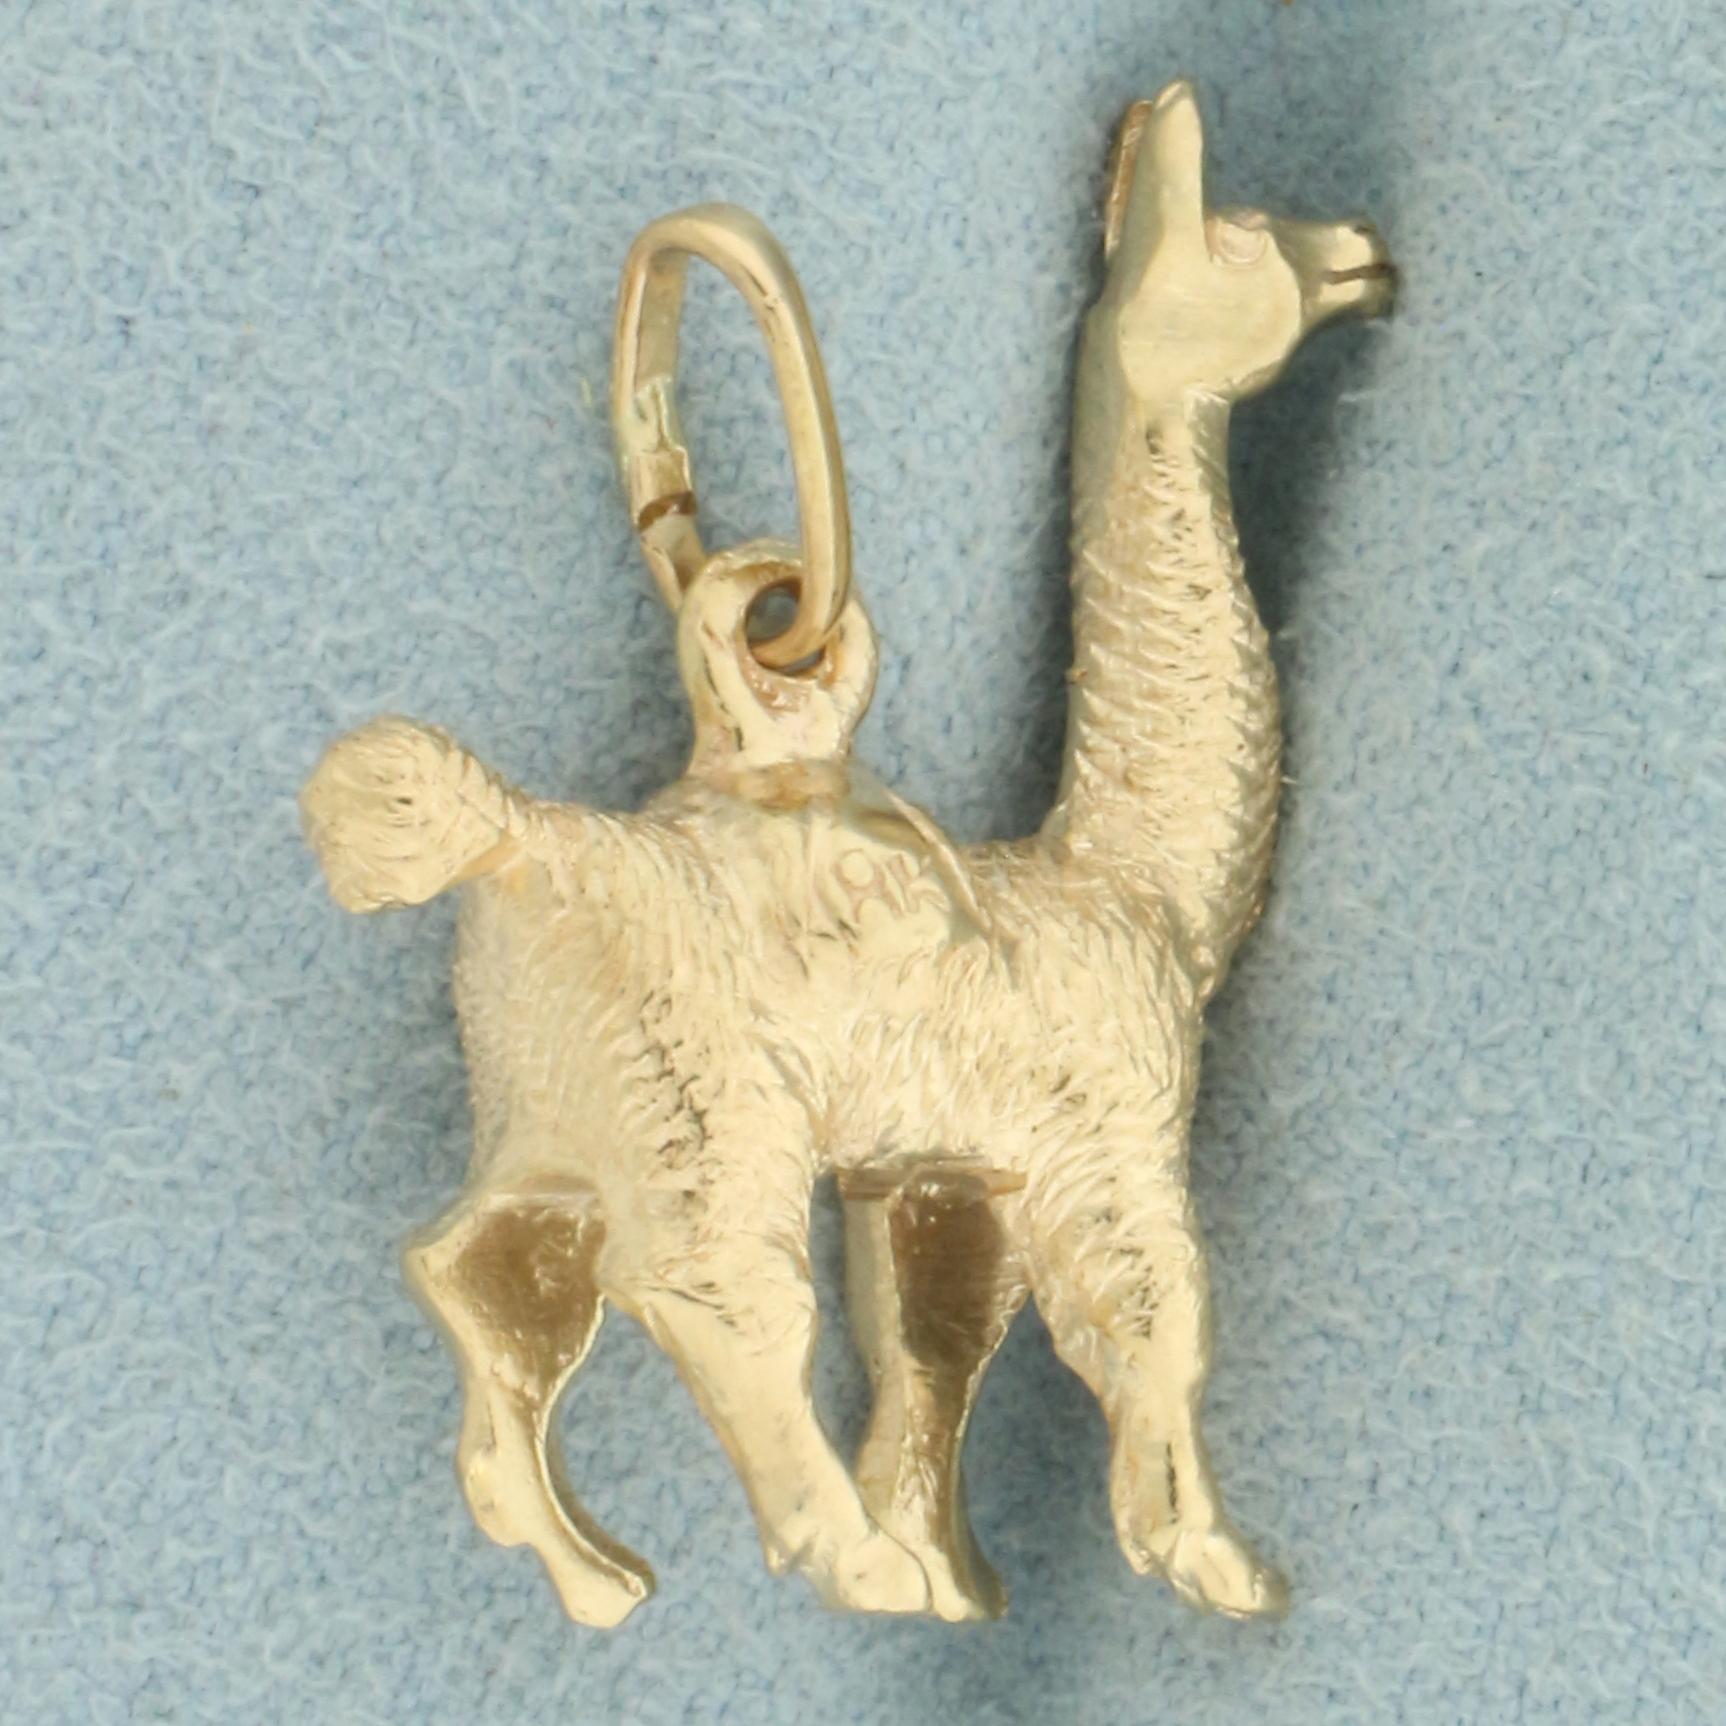 Llama Or Alpaca Pendant Or Charm In 18k Yellow Gold